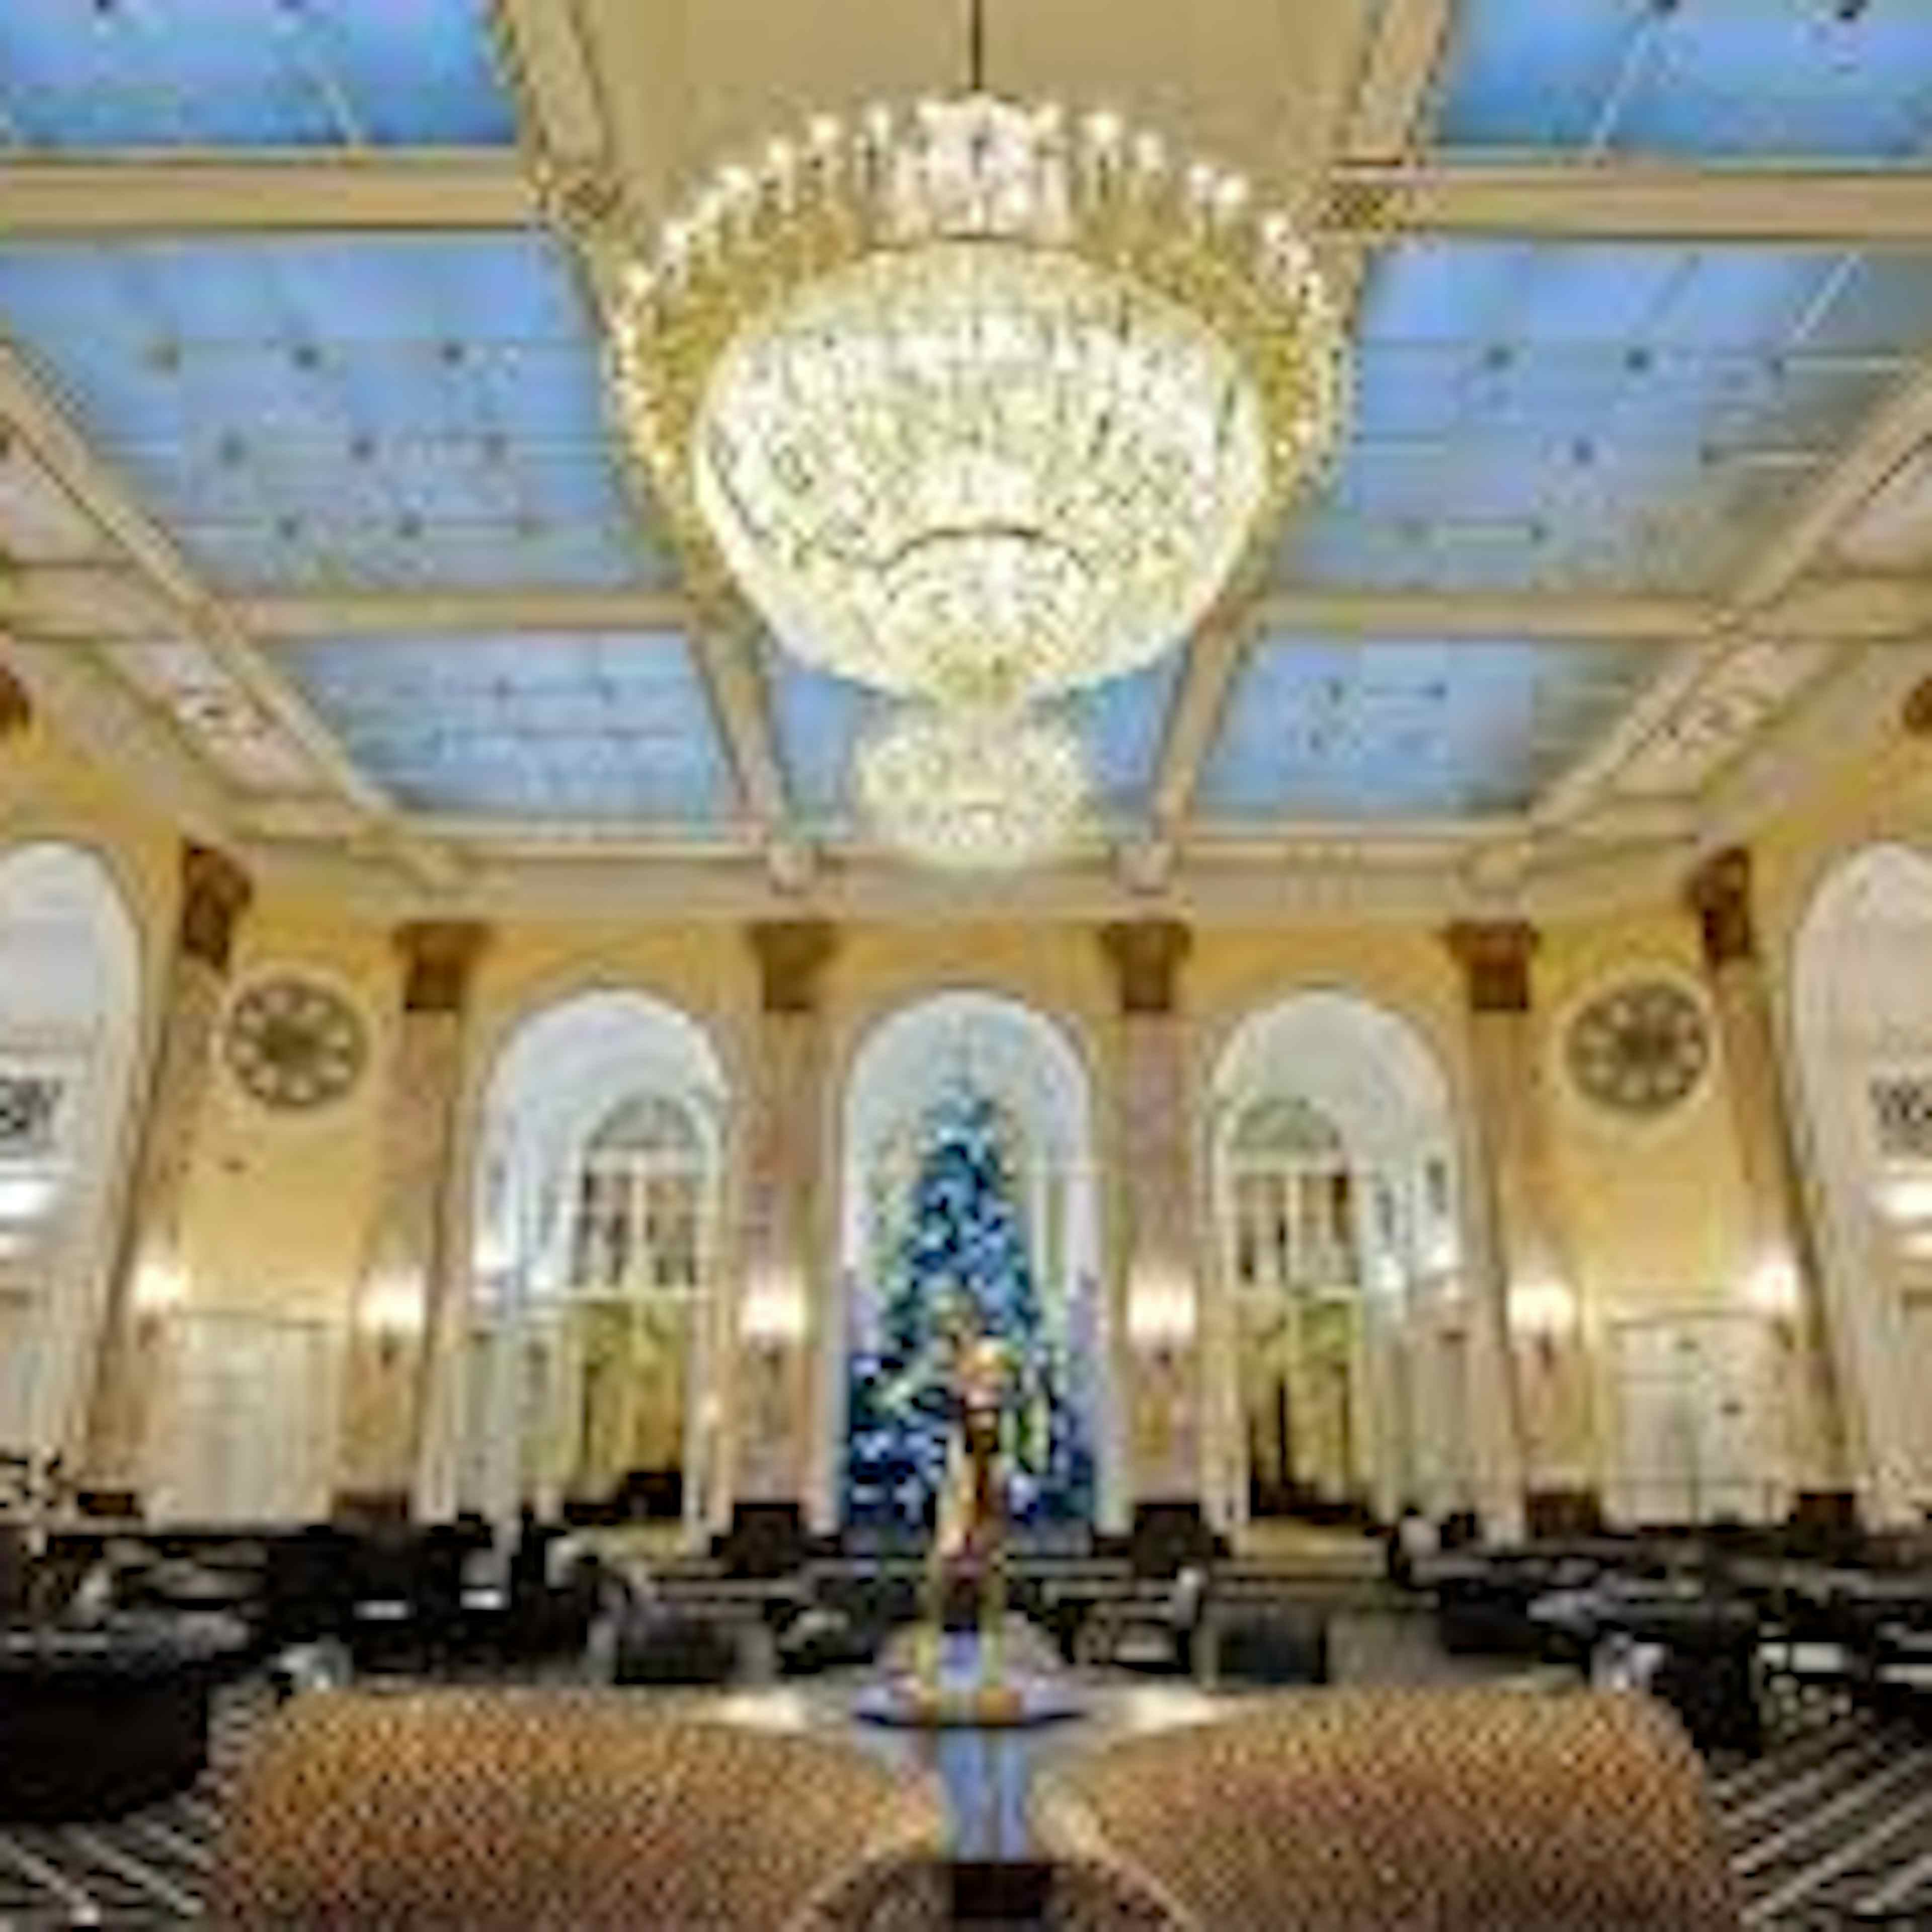 The Adelphi Hotel - Grand Lounge image 2